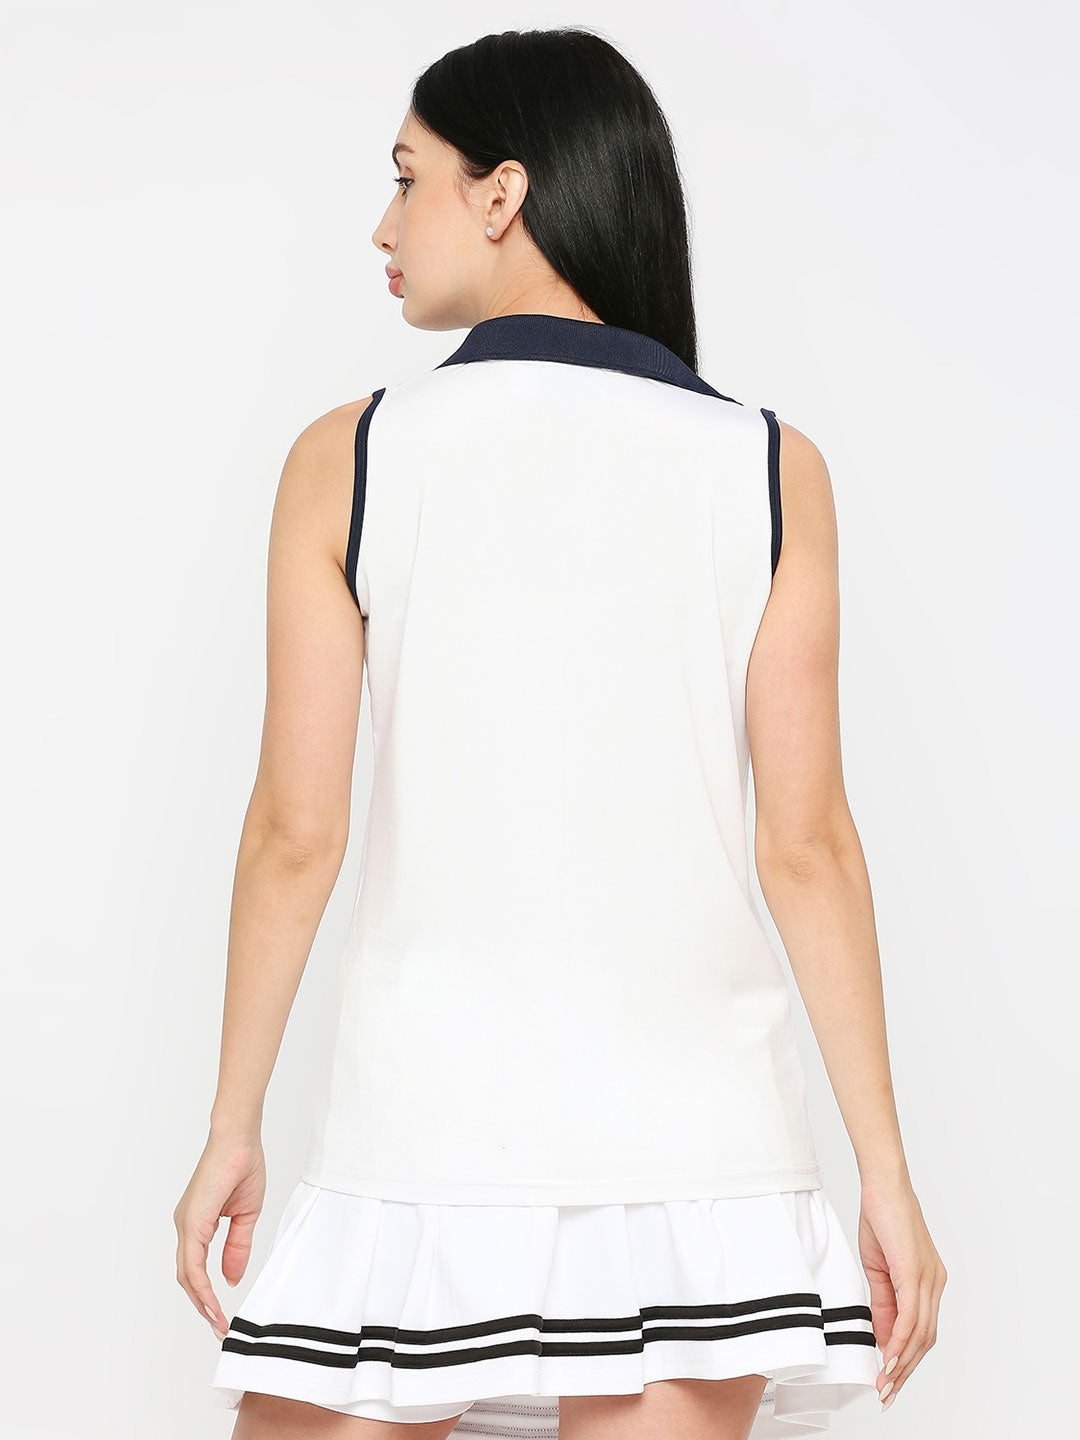 Women's White Tennis Vest - 1